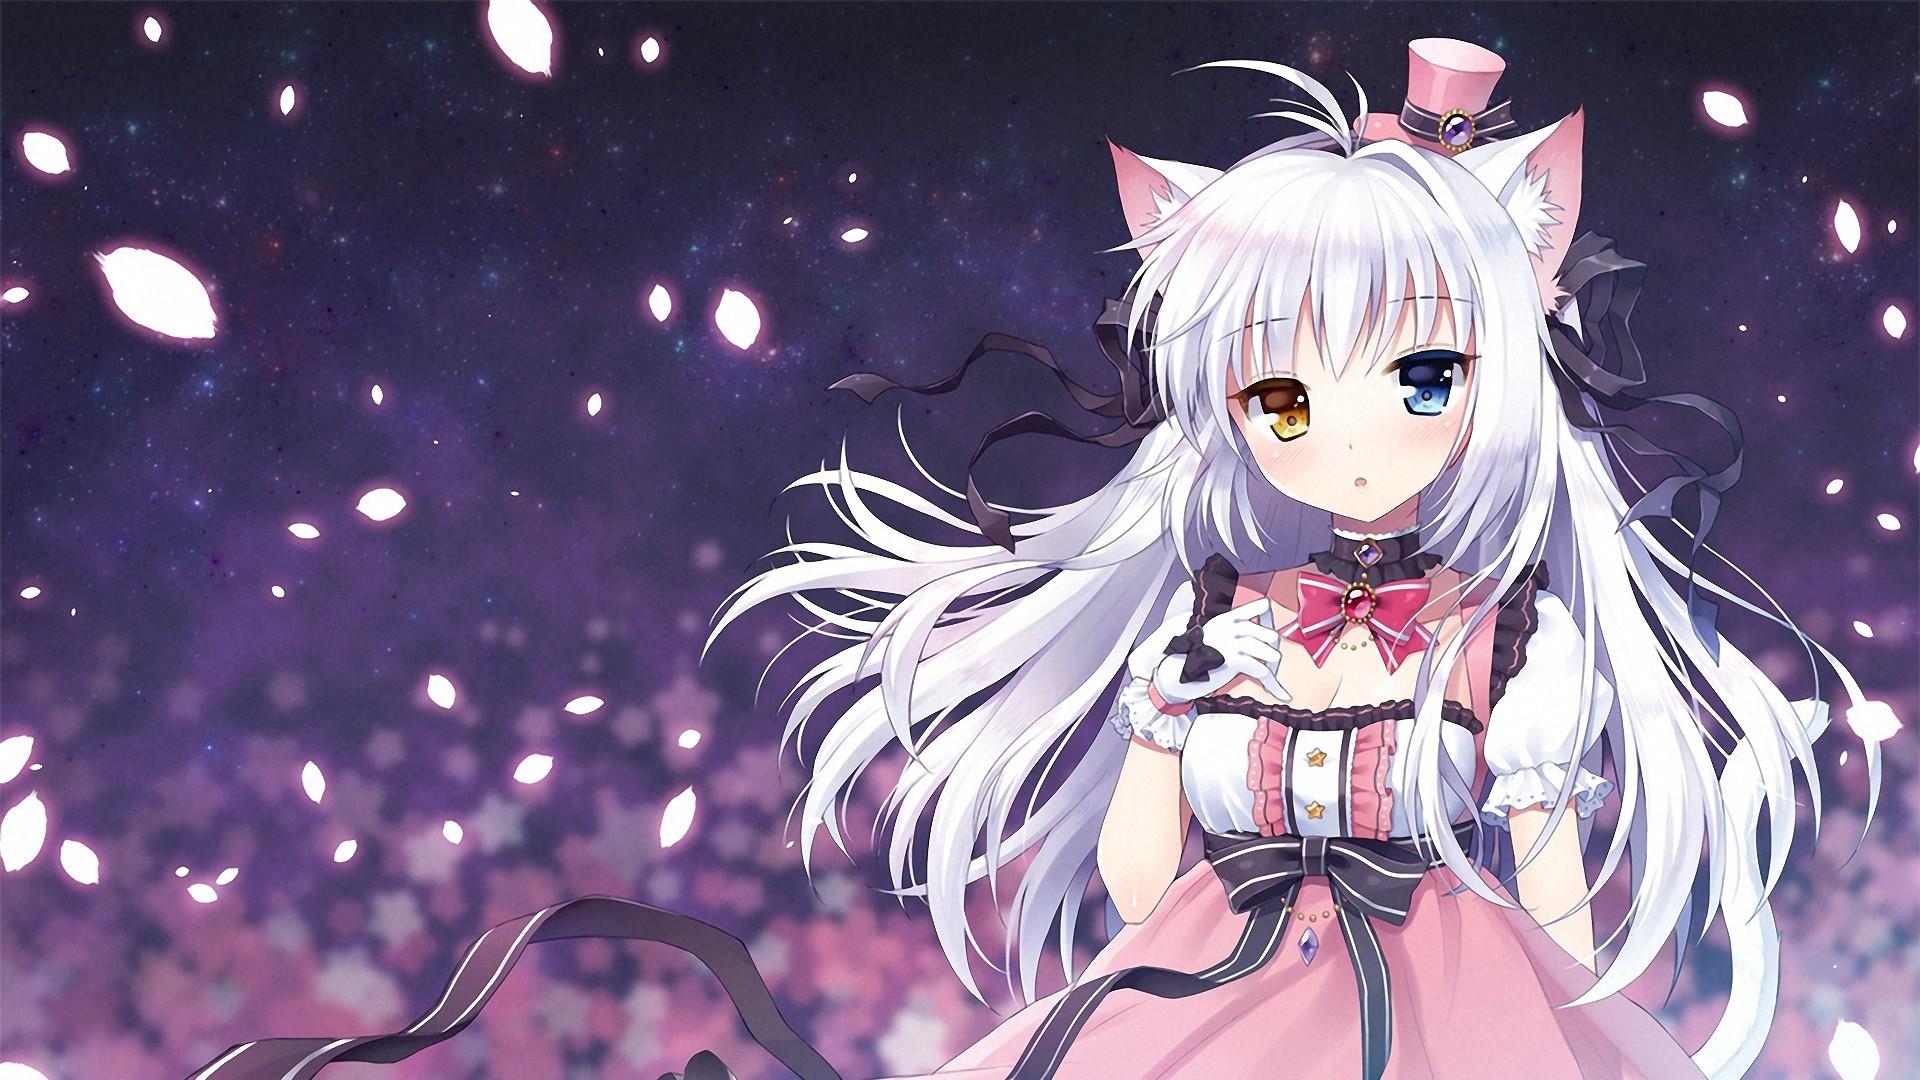 Anime Cat Girl HD Wallpaper Free Download for Desktop PC Laptop